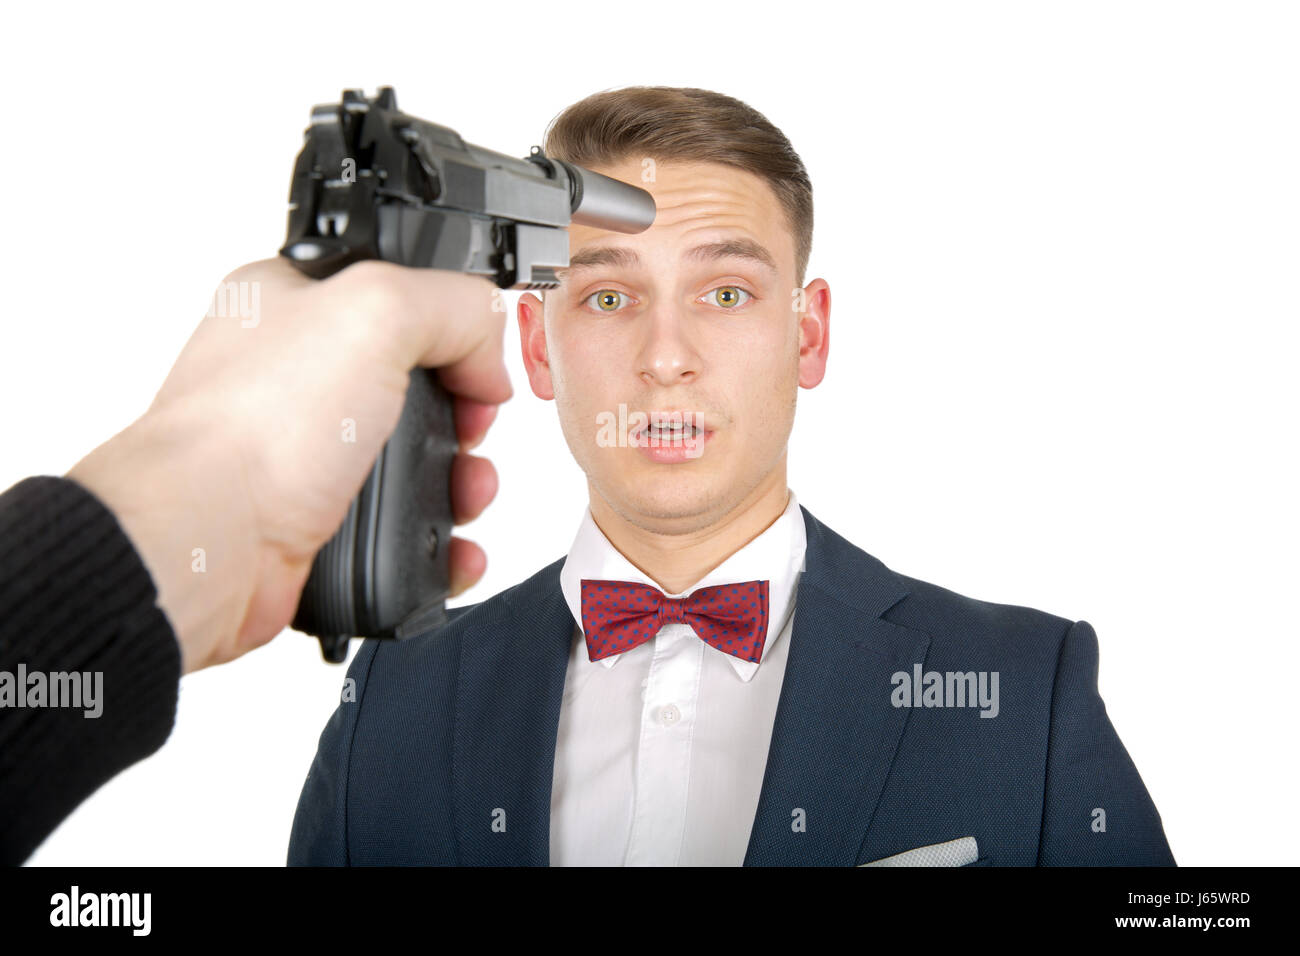 Pointing handgun on a business man's head Stock Photo